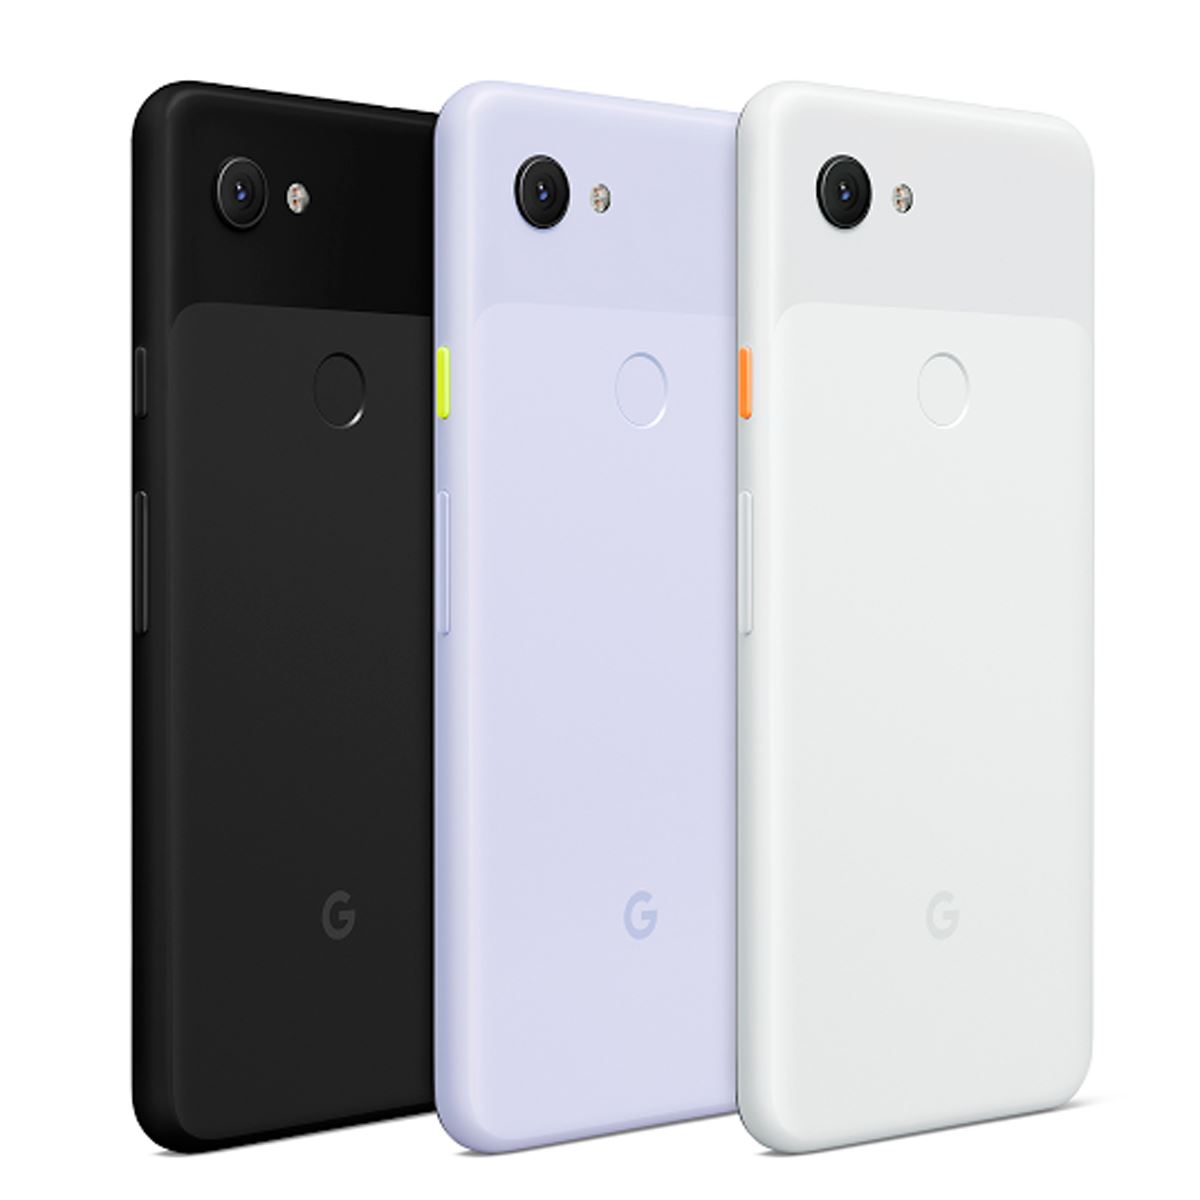 Googleが48,600円の「Pixel 3a」発表。「Pixel 3」との違いは？ - 価格 ...